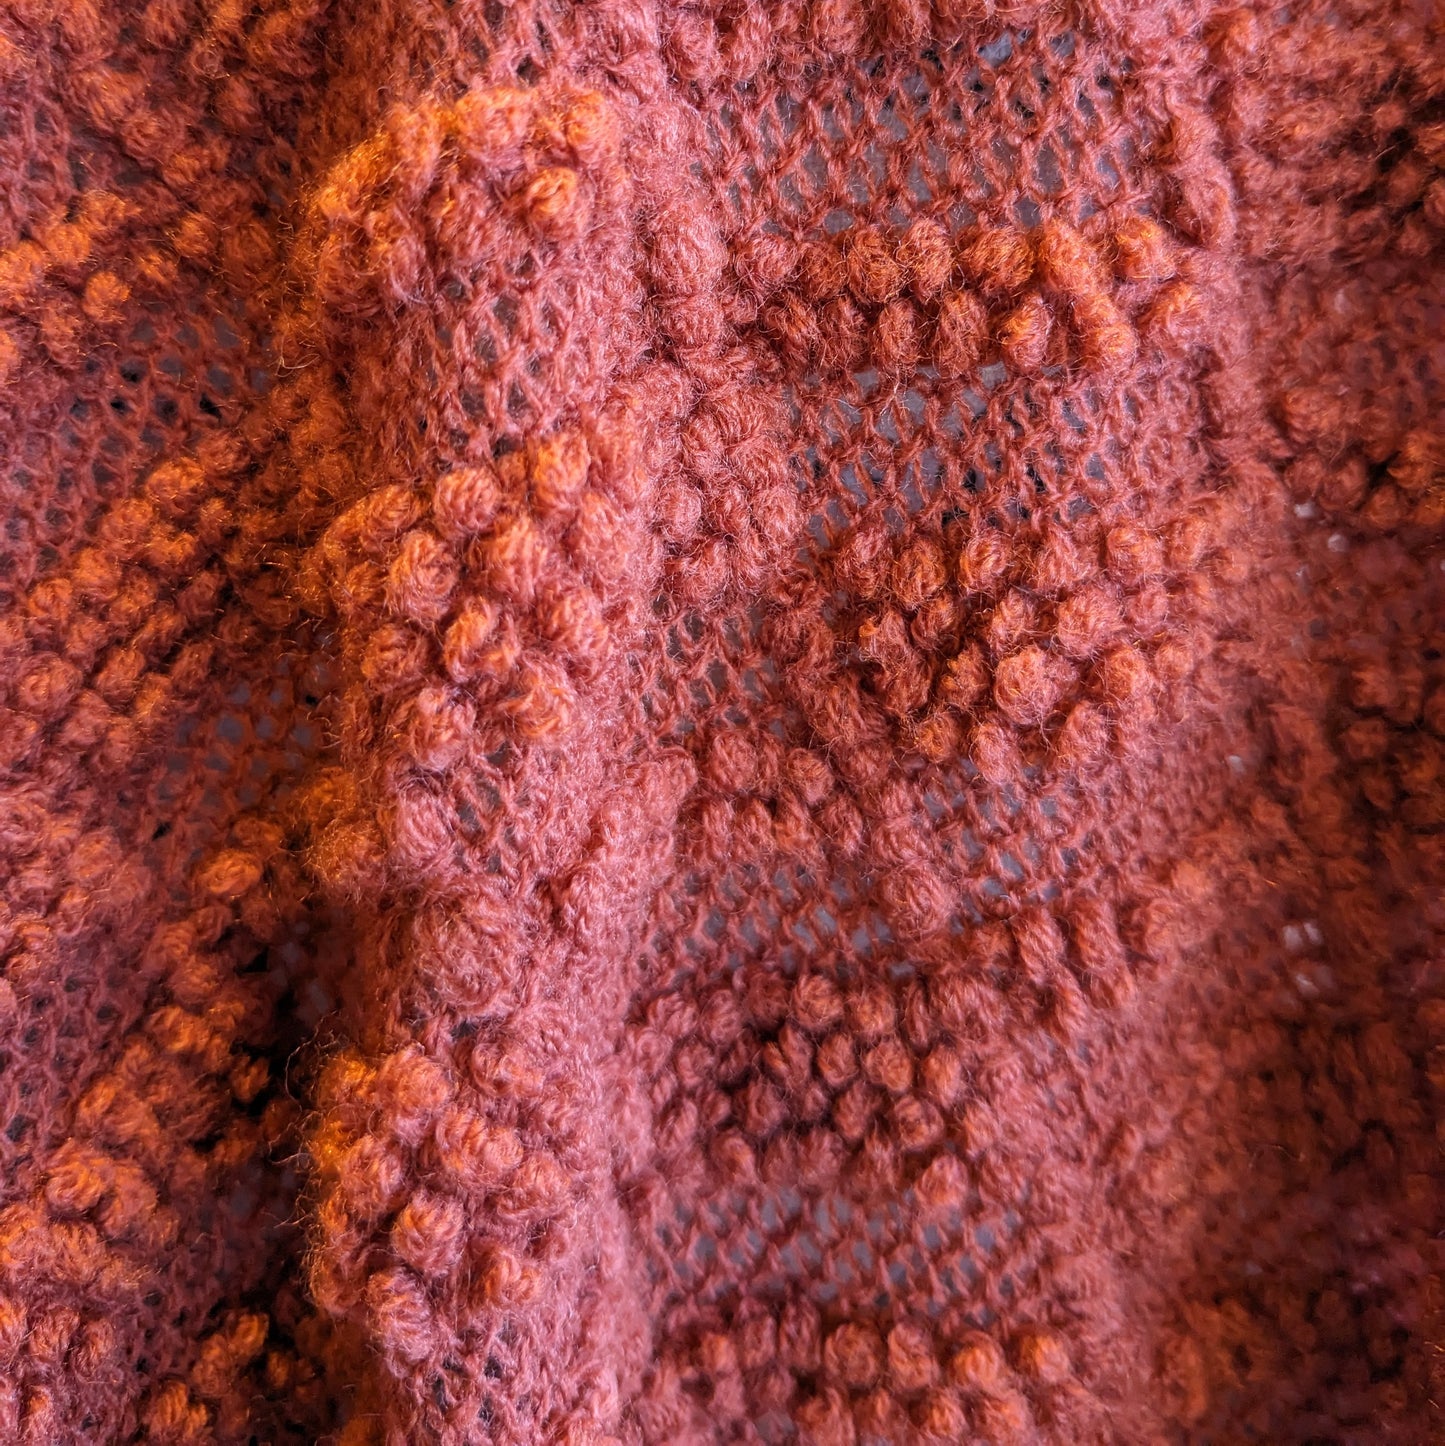 Burnt Orange Poncho Sweater O/S